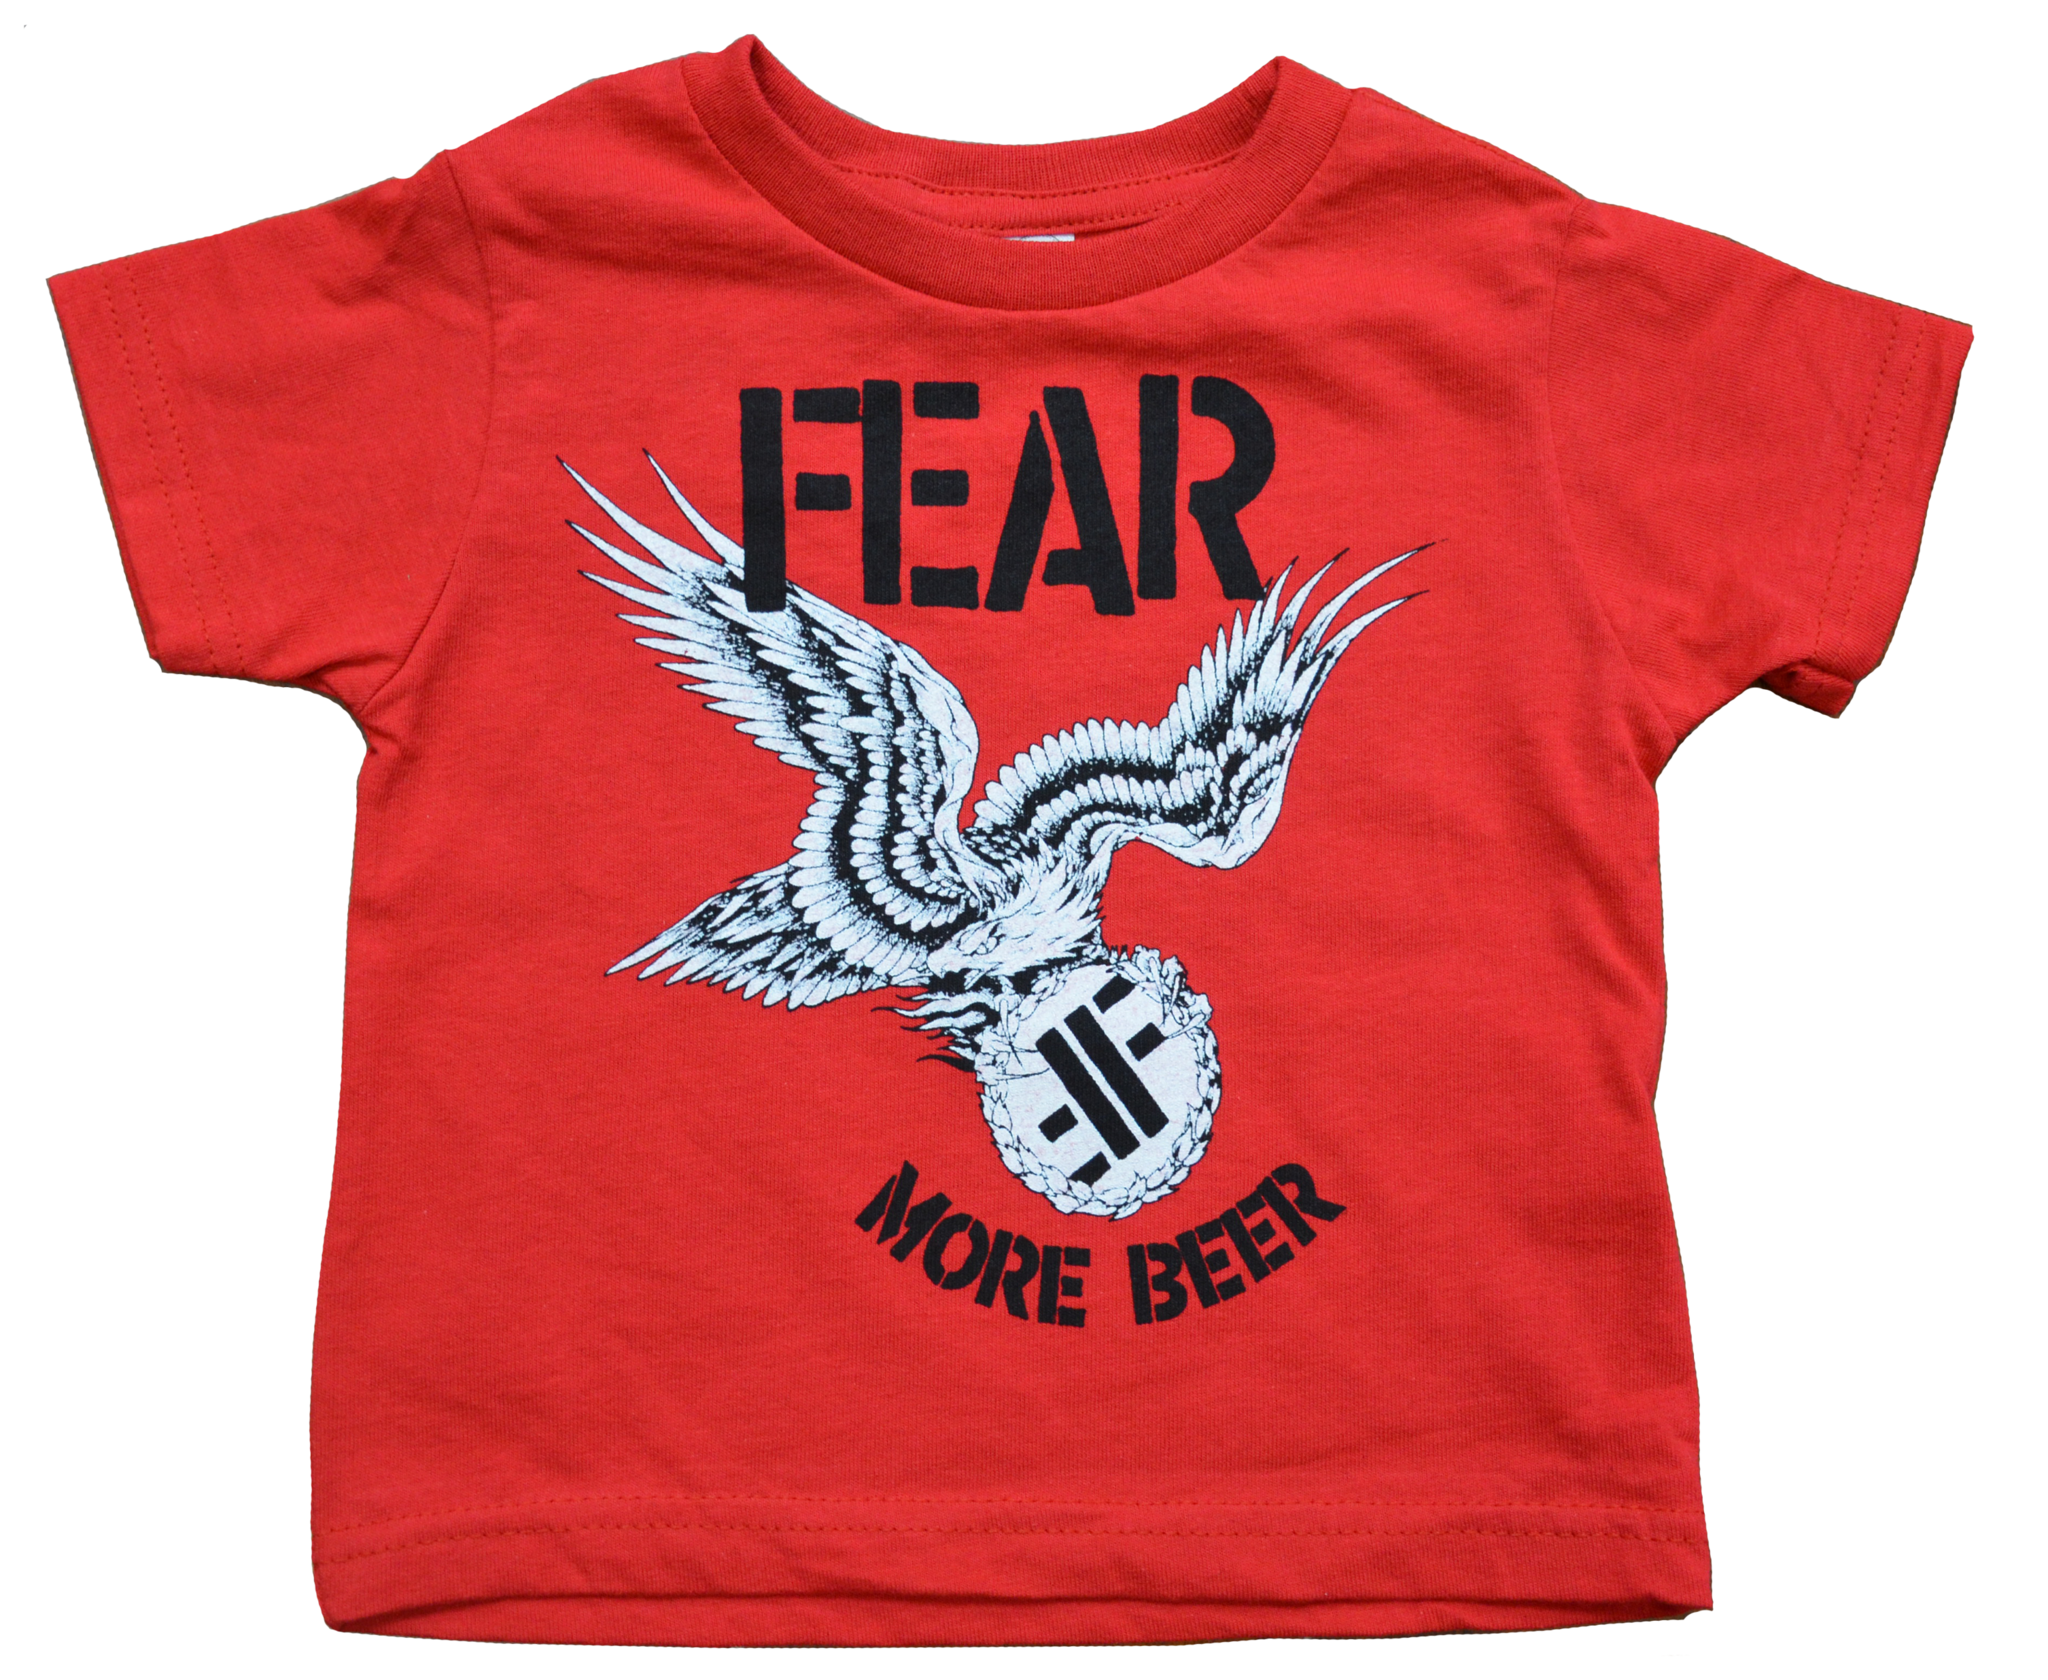 FEAR "MORE BEER" TODDLER/KIDS T-SHIRT